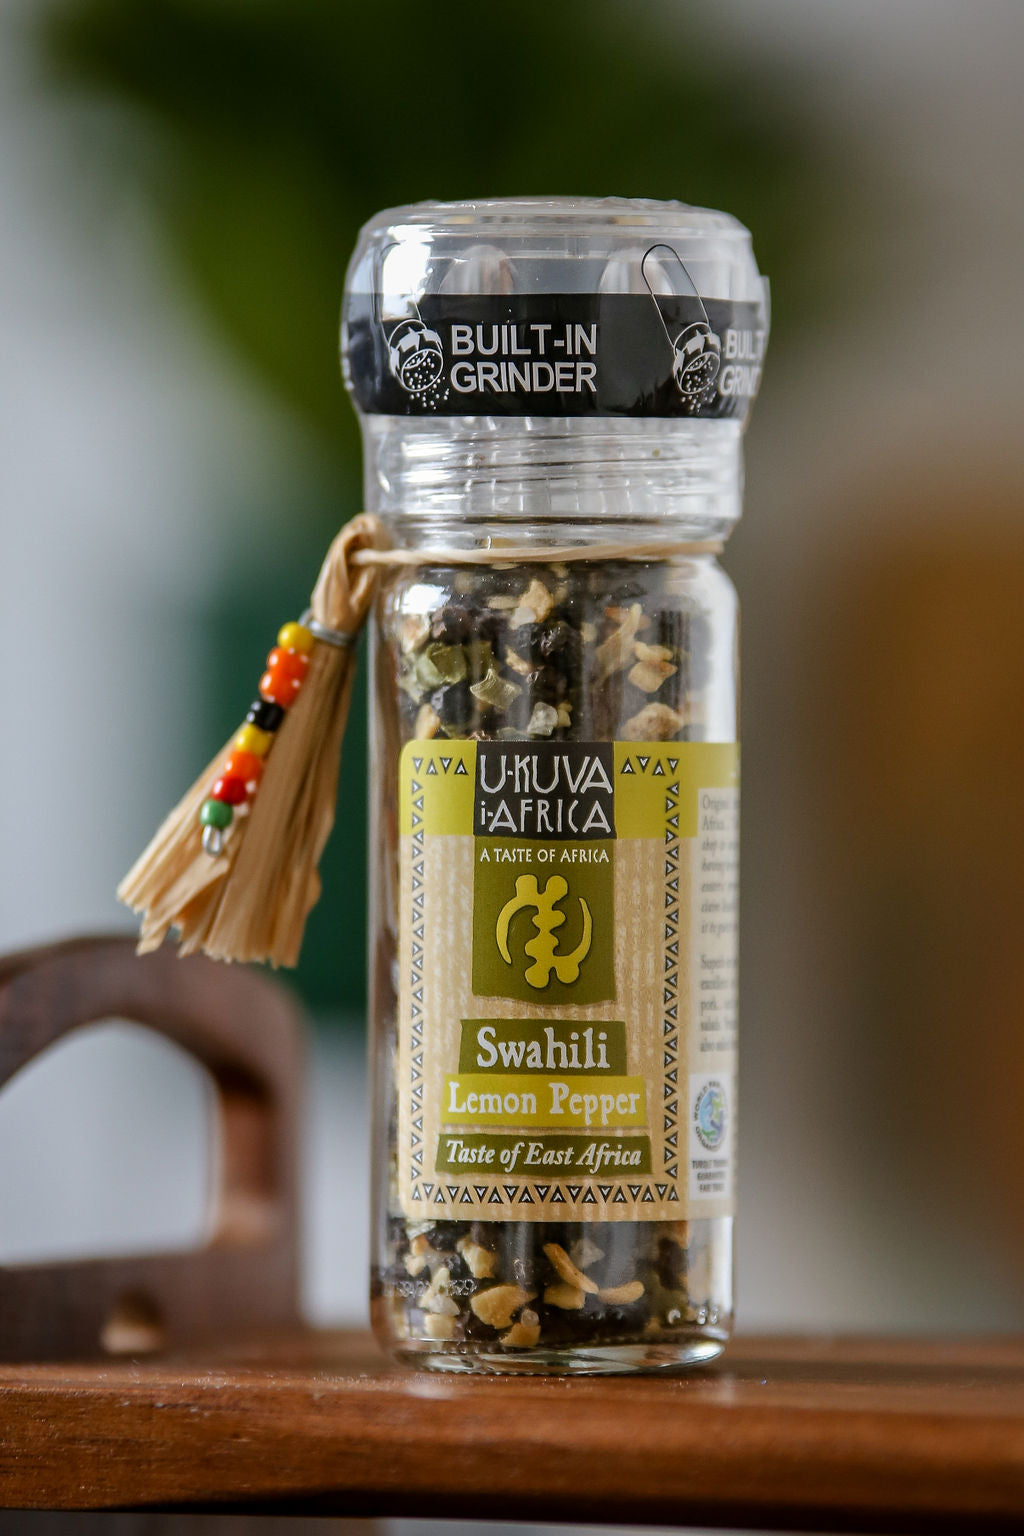 Garlic Chilli Hot Drops & Herbs Grinder Gift Set